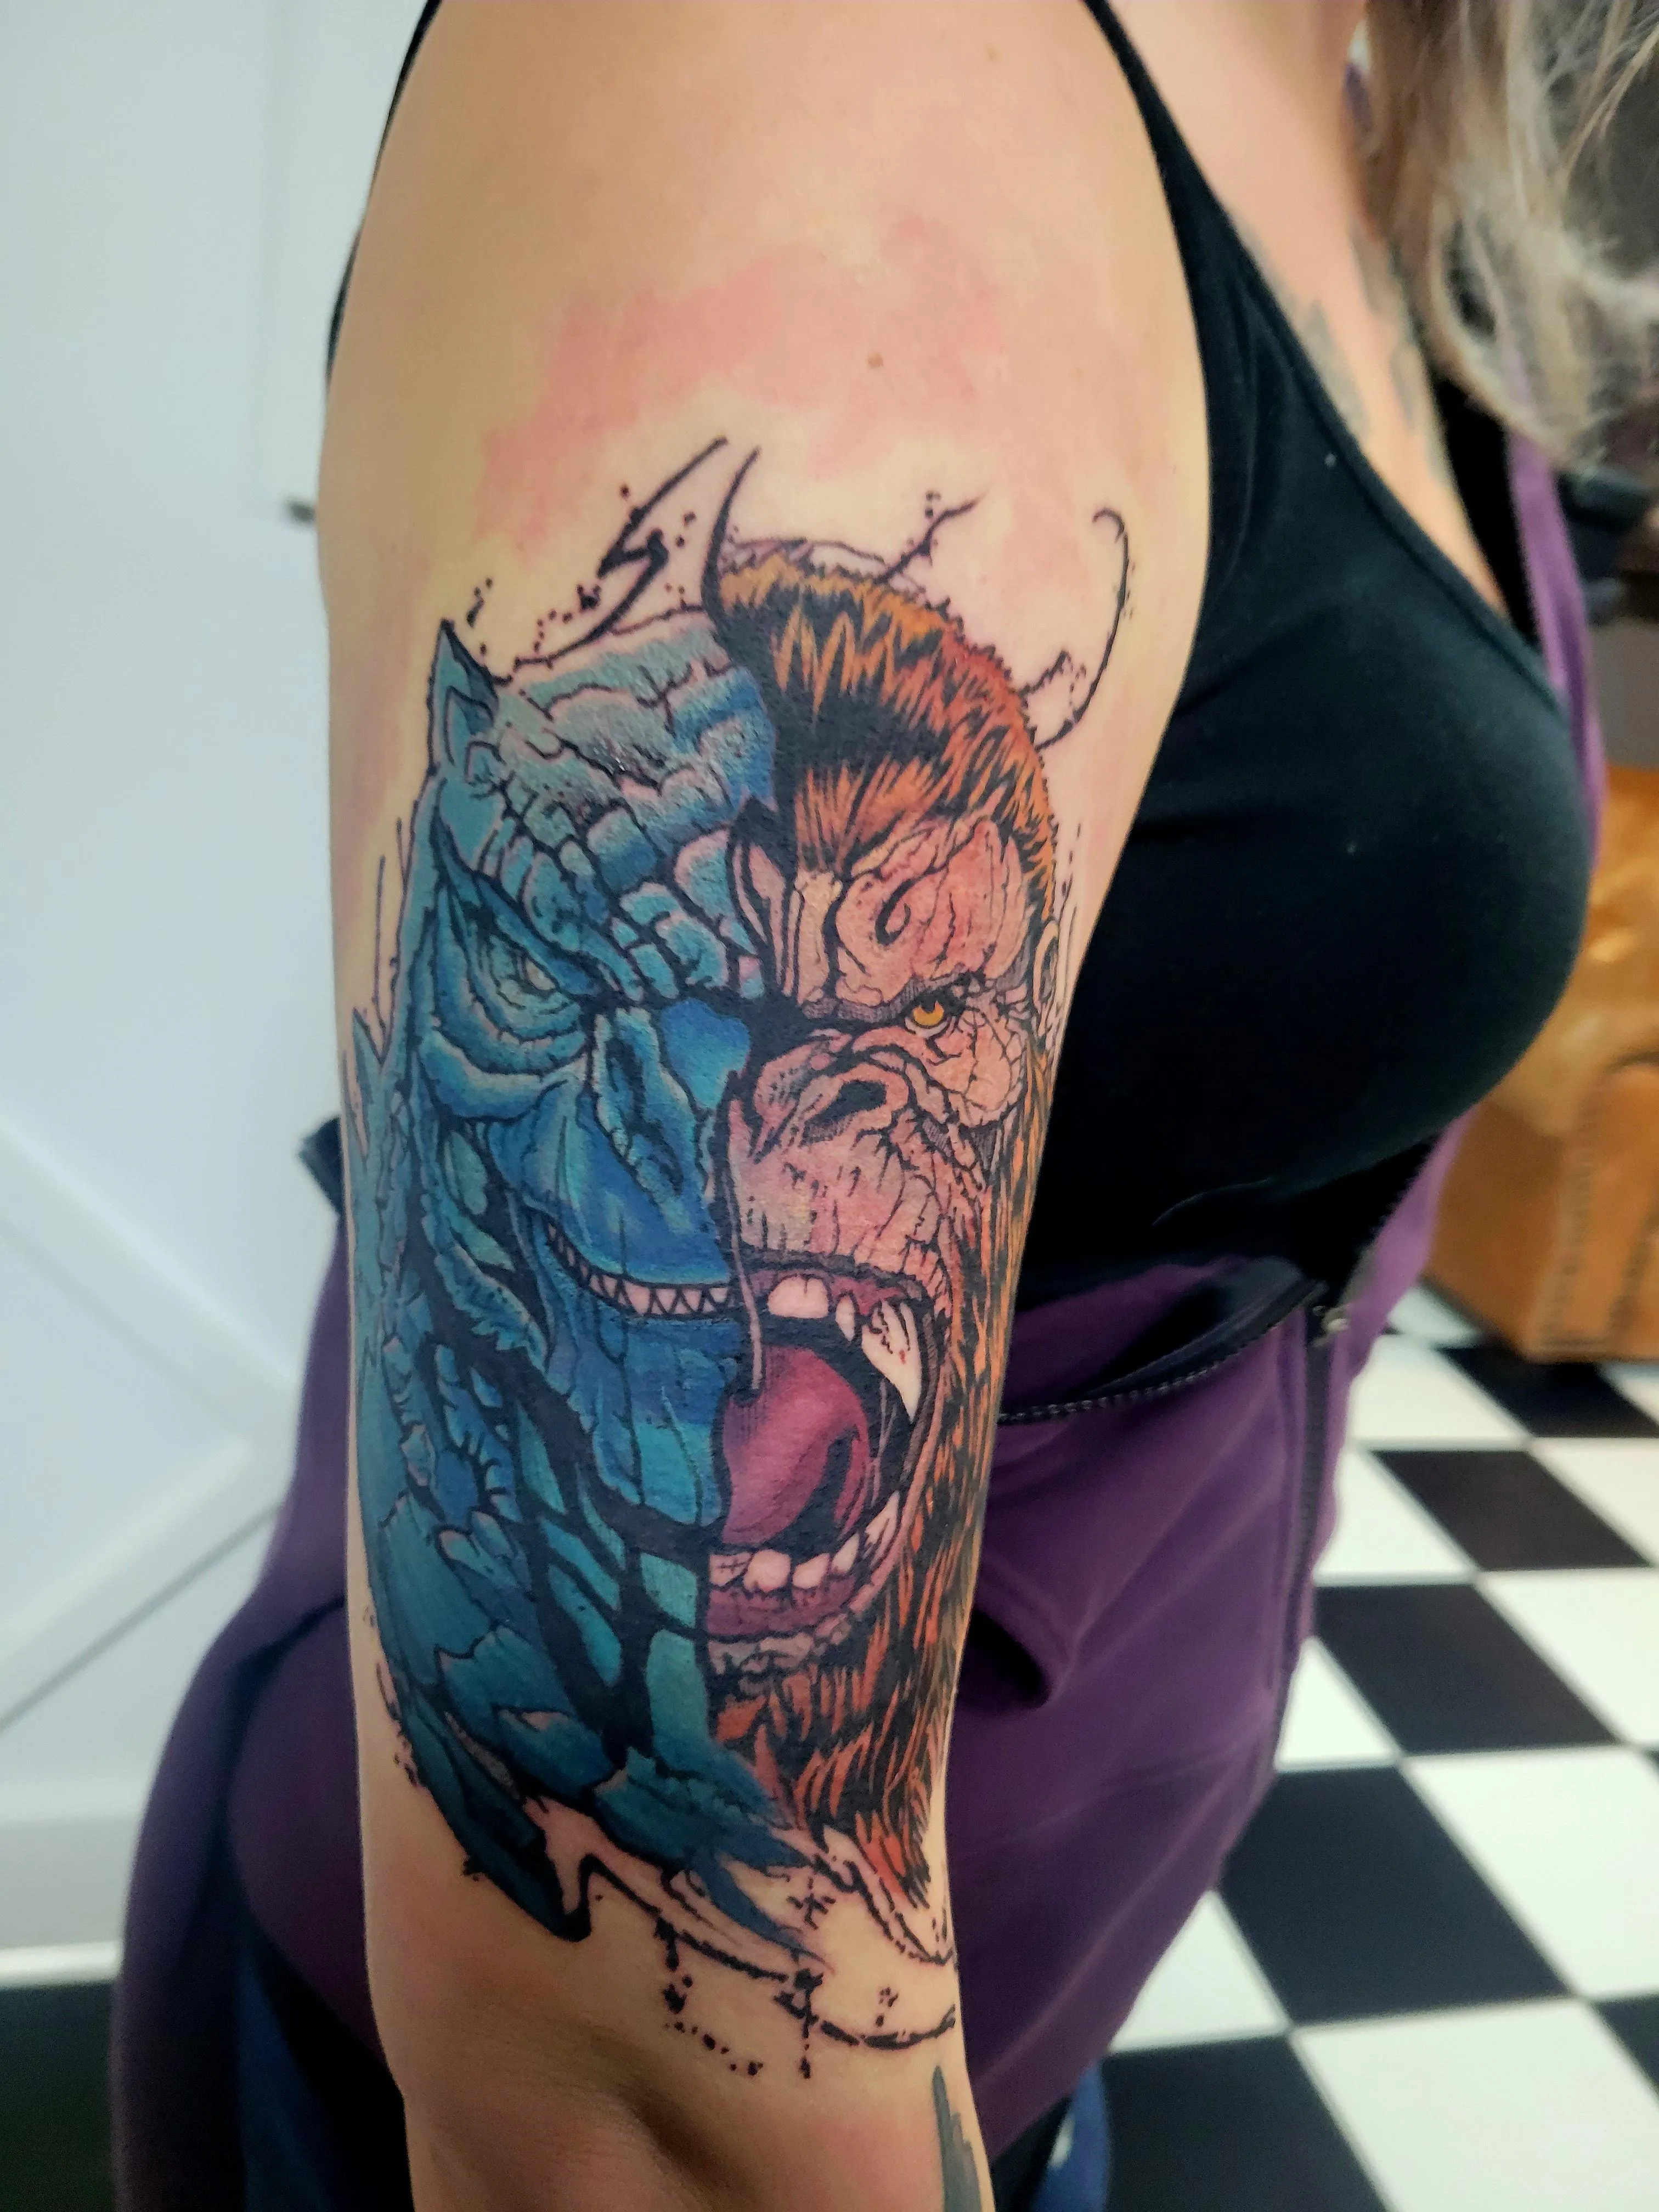 Vibrant Shoulder Tattoo of Kong and Godzilla